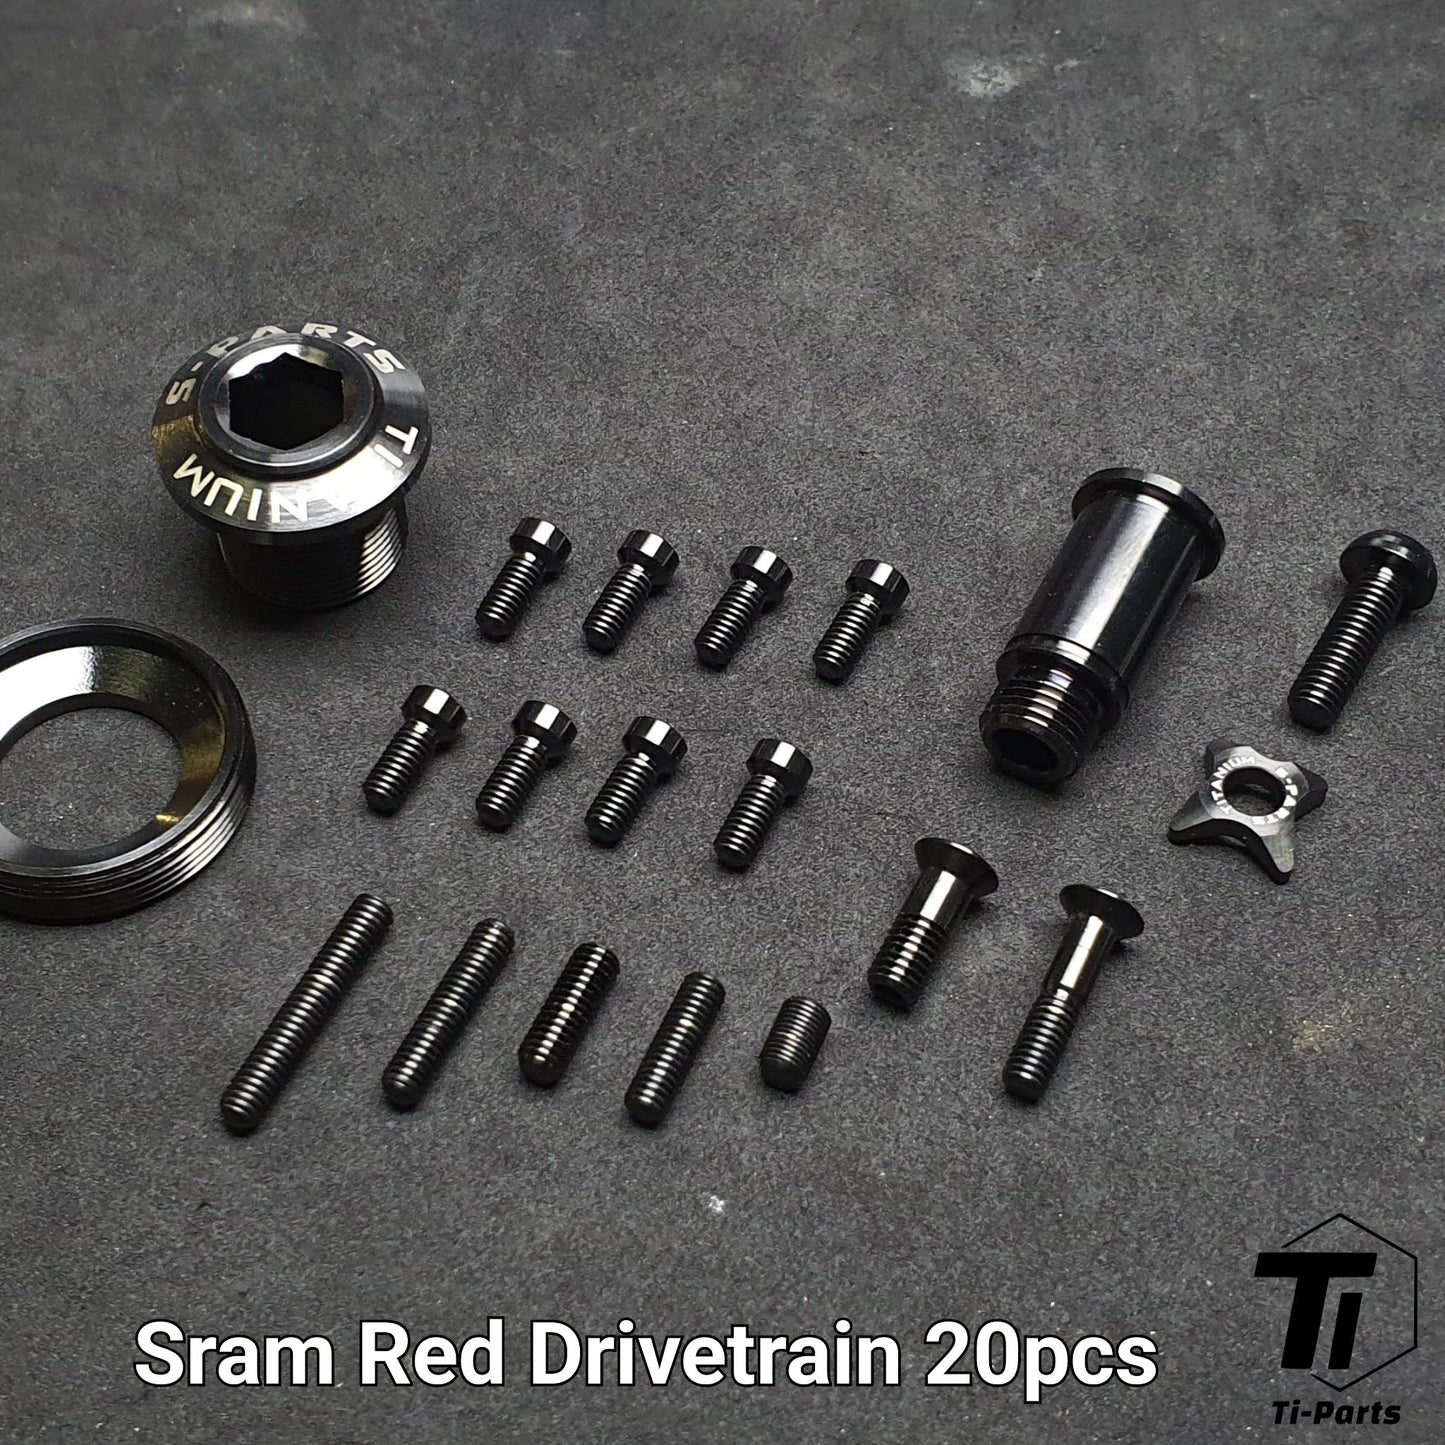 Titanium Sram Red Force Rival eTap AXS Full Upgrade Kit | Hydraulická kotoučová brzda 11s 12s Pohon ráfkové brzdy Full Ti upgrade | Titanium 5. třídy Singapur